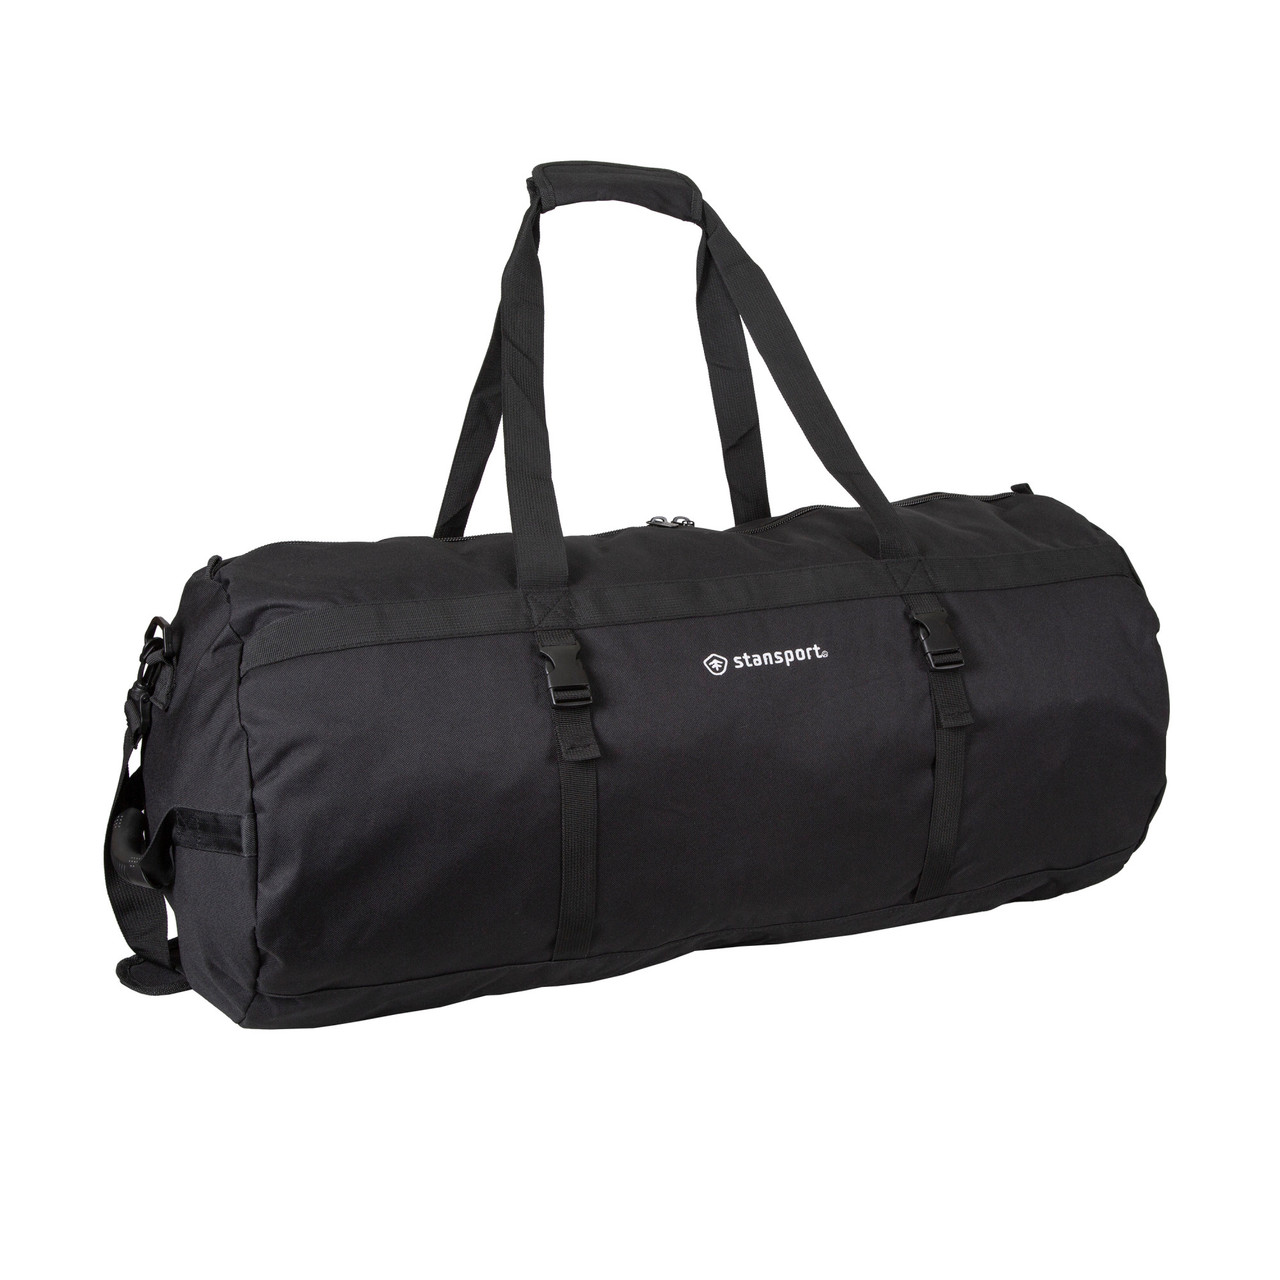 COOLBEBE 36 Sports Duffle Bag - 100L Large Travel